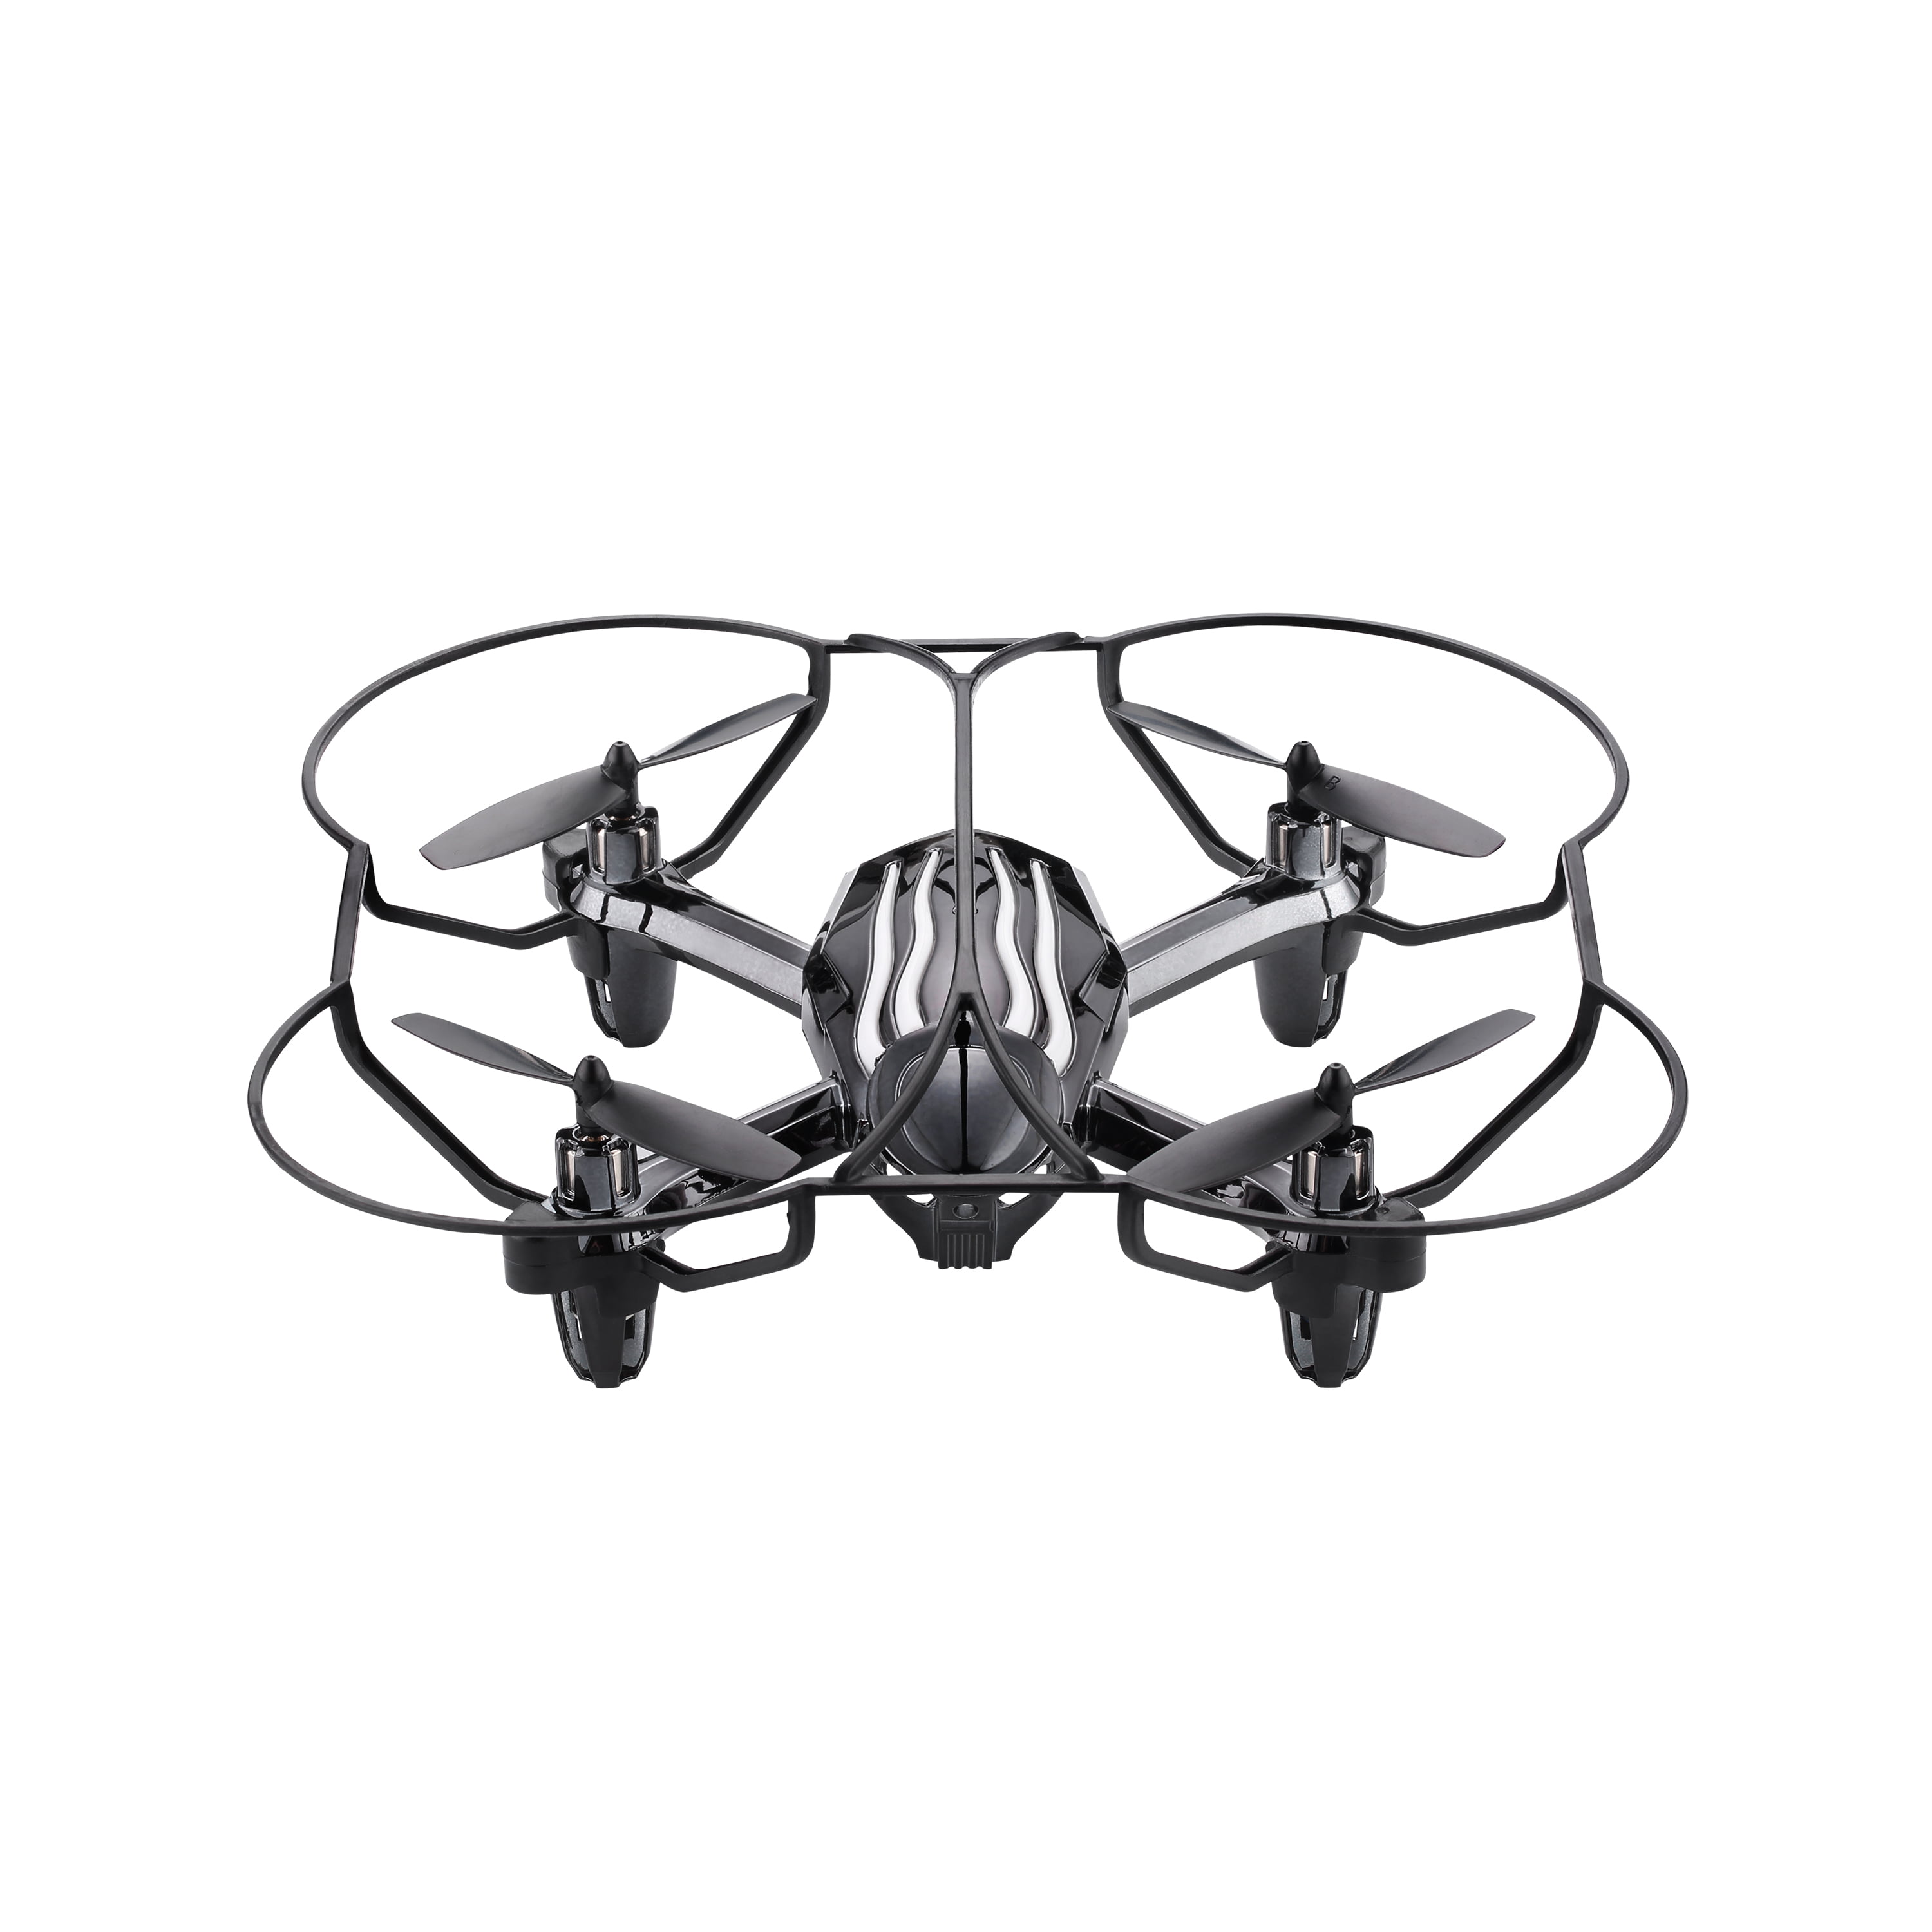 Propel Spyder X Palm Sized High Performance Stunt Drone - Drone HD